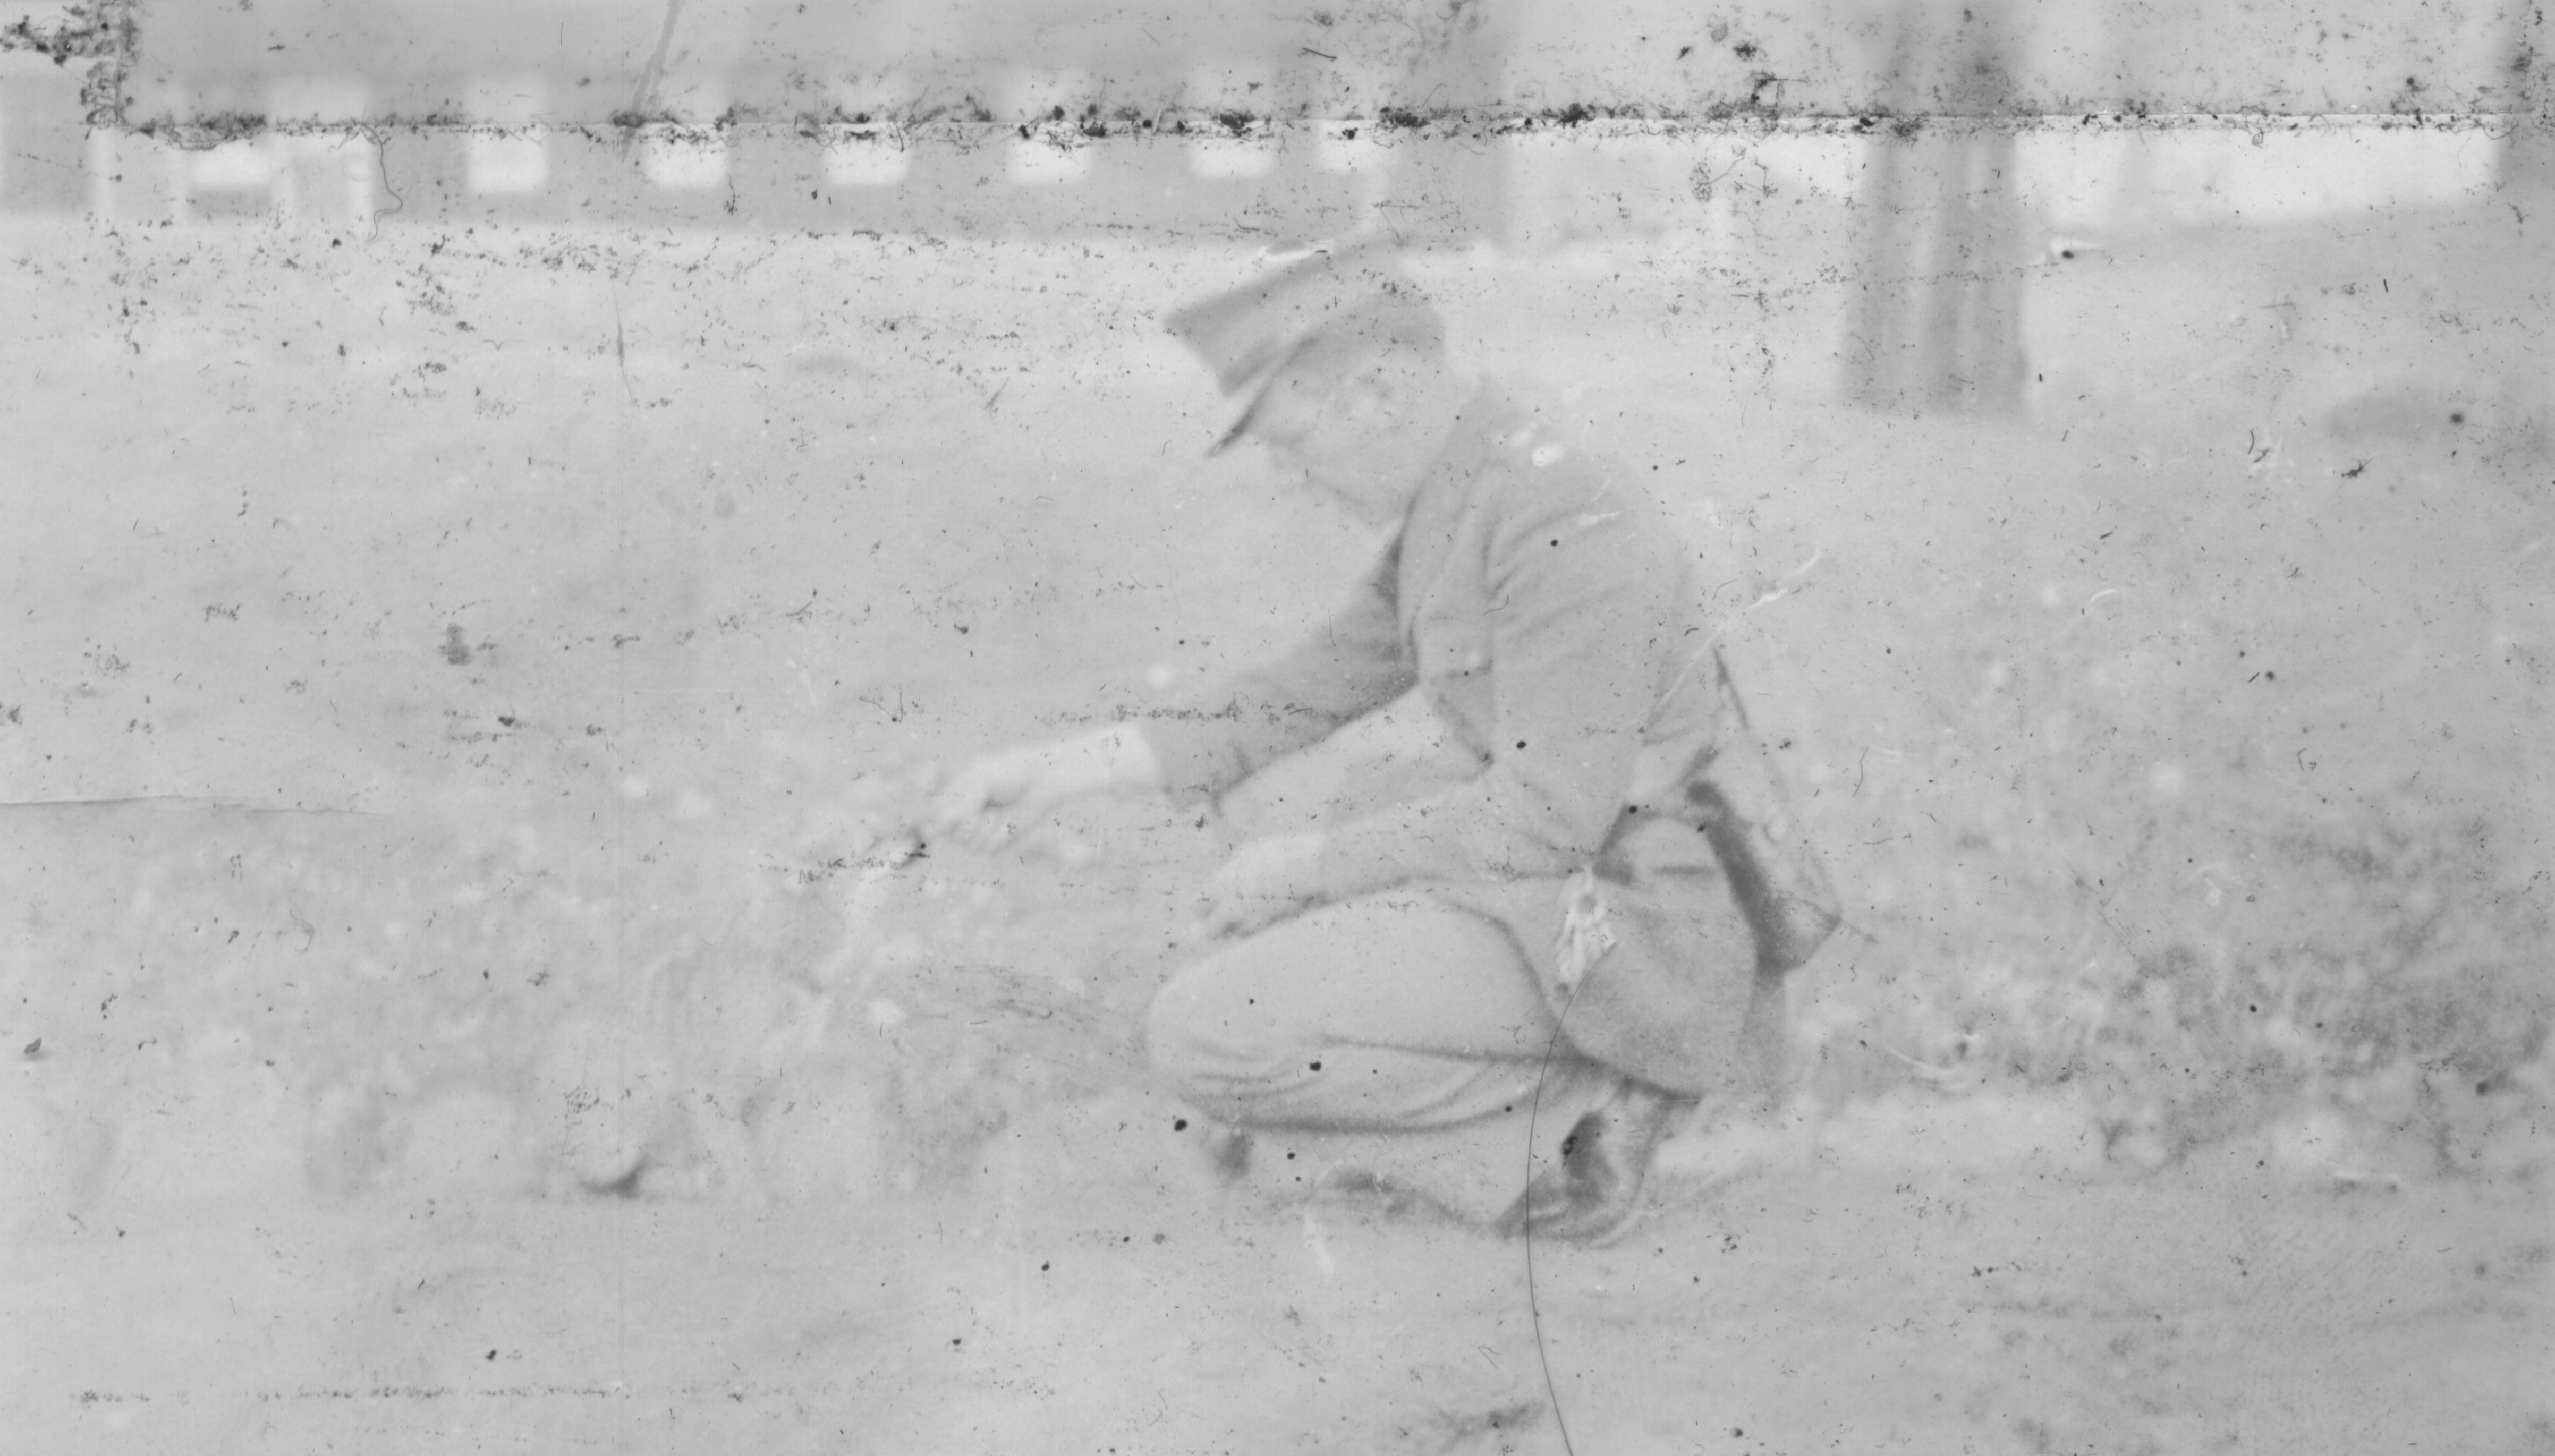 Capt. John S. Shipley with a fox at the Leeds CCC Camp